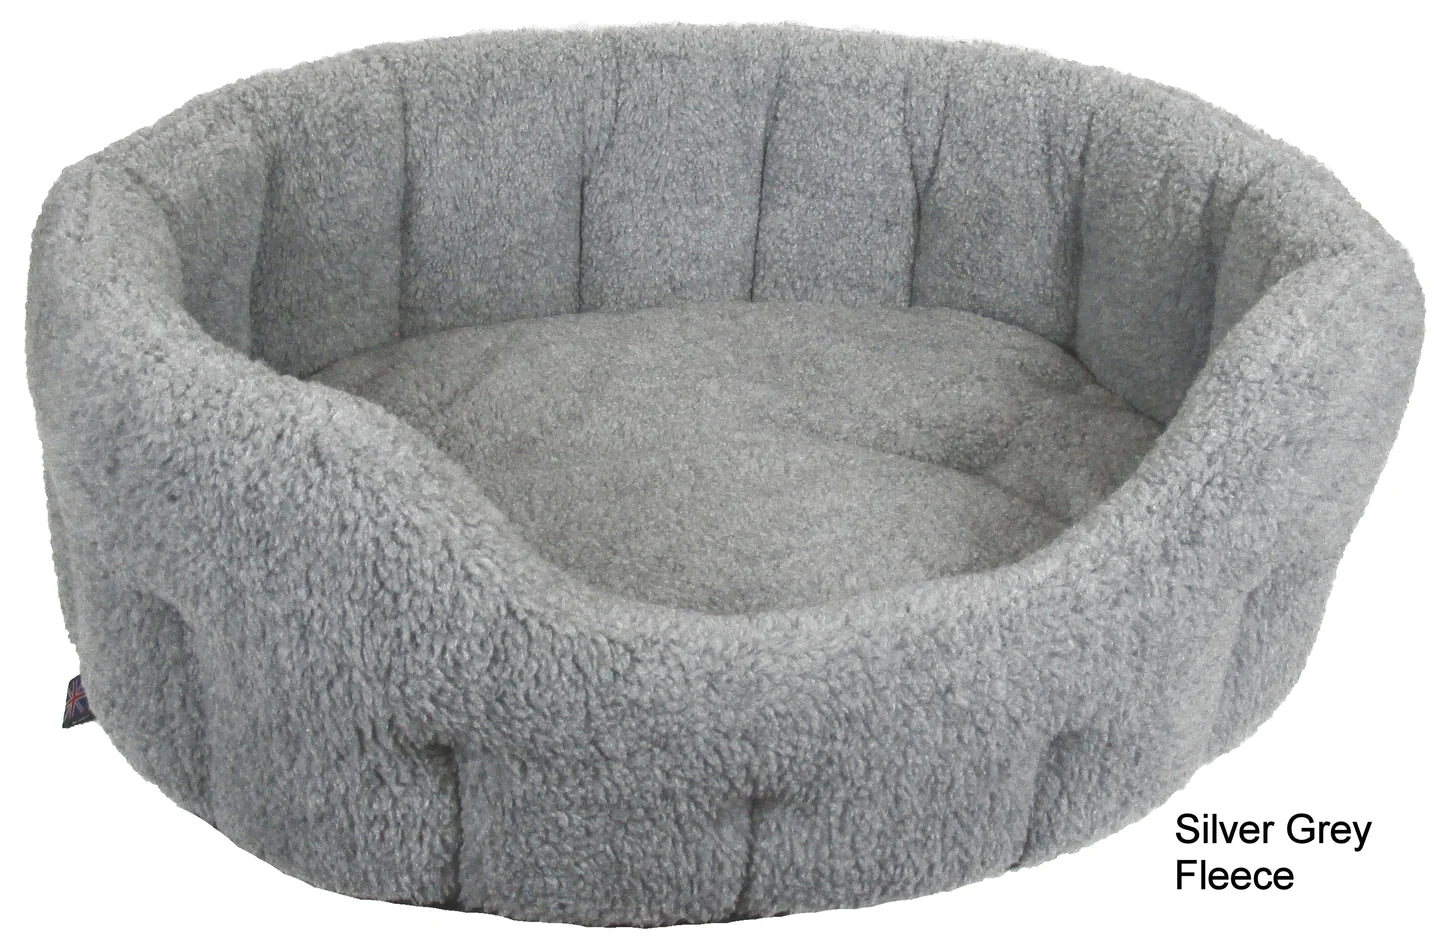 P&L Premium Oval Drop Fronted Sherpa Fleece Softee Bed Silver / Grey Fleece